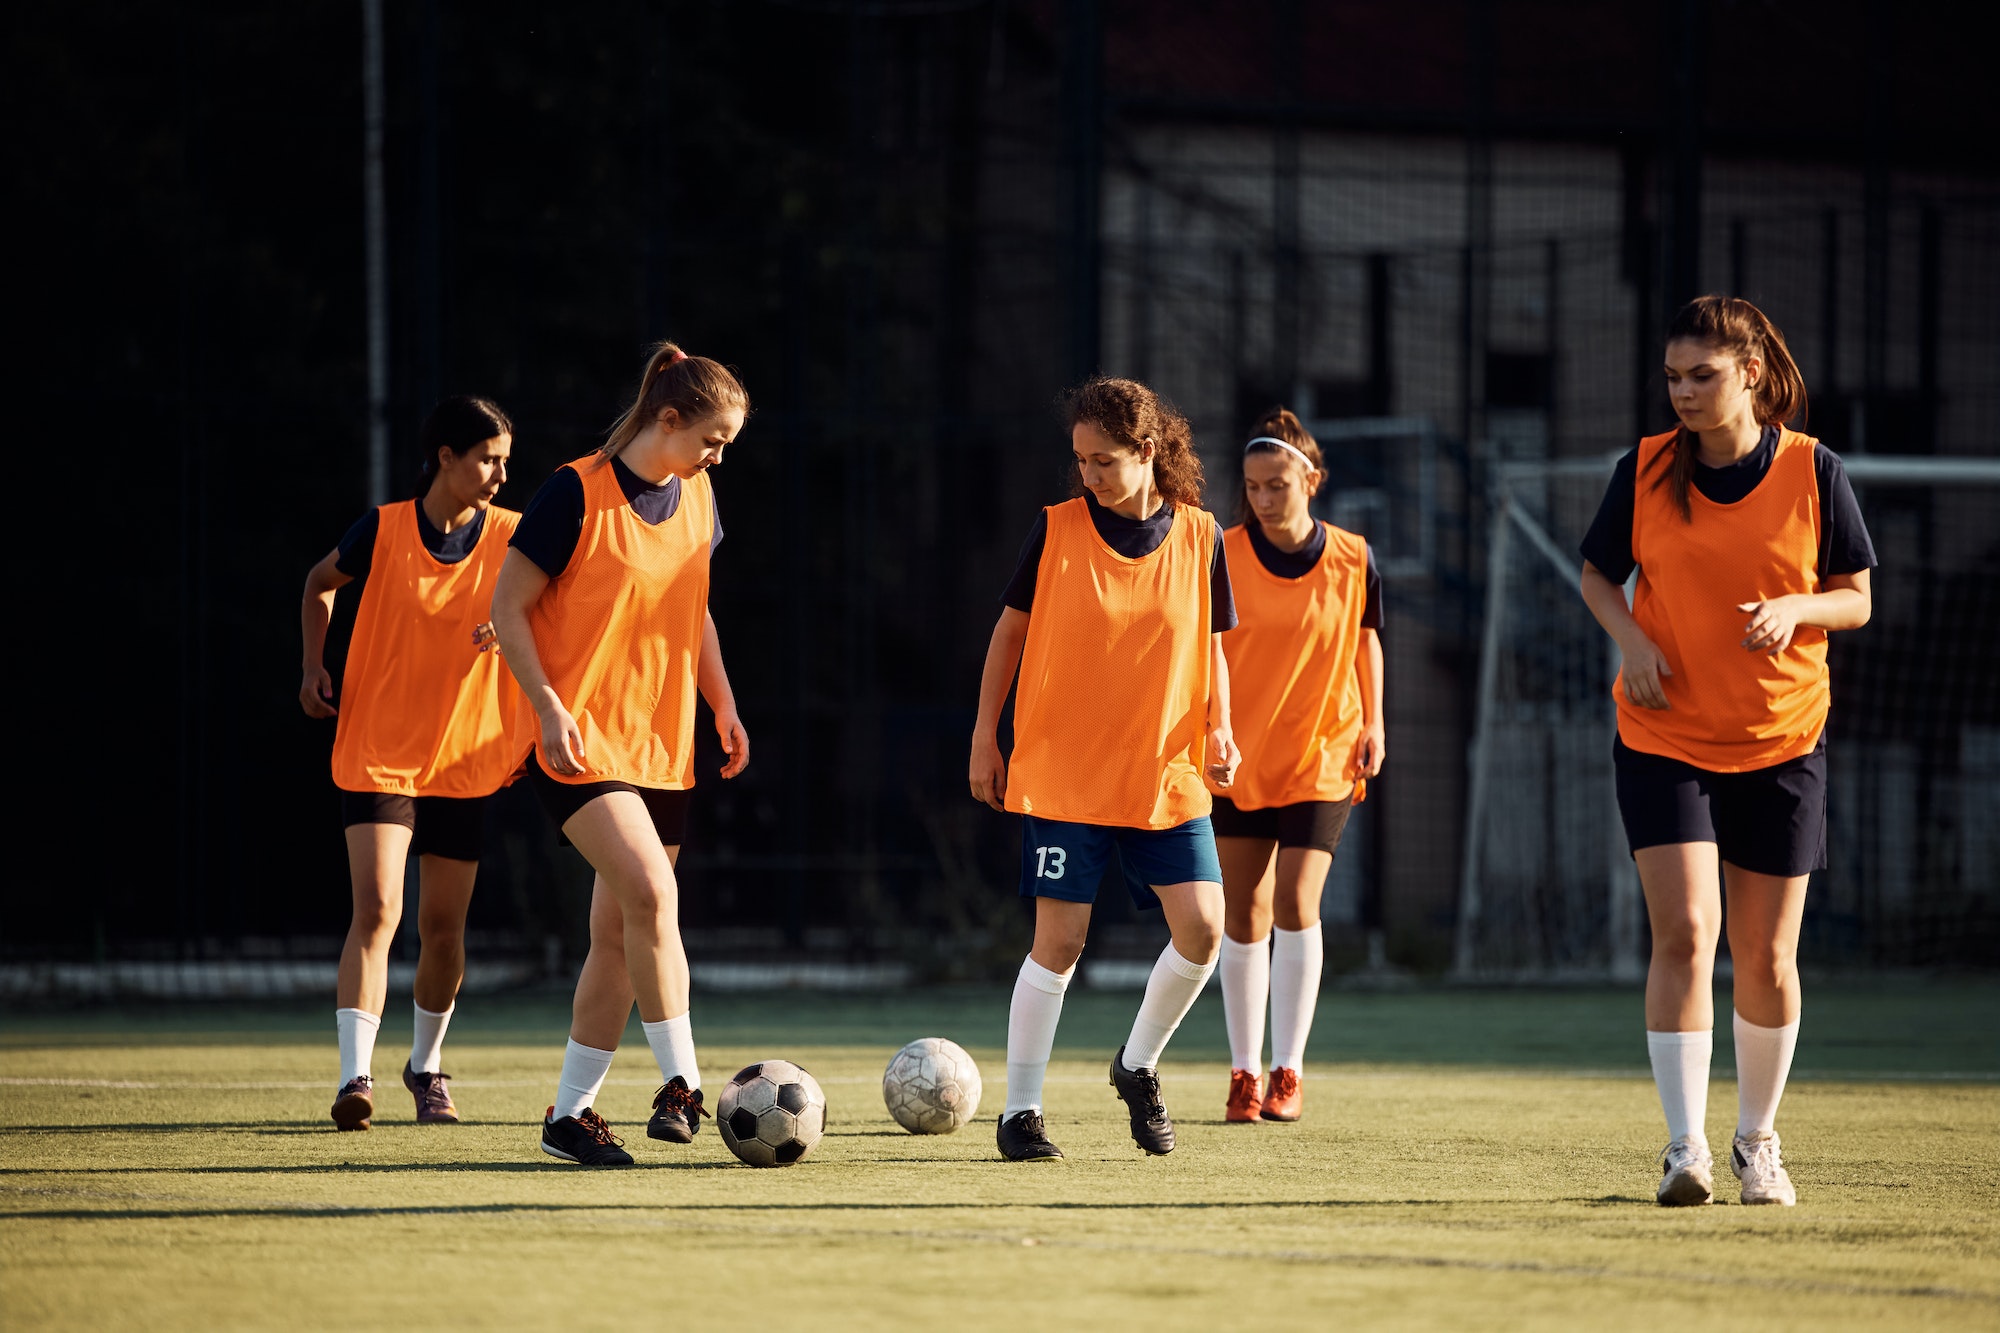 Female soccer players having sports training at the stadium.